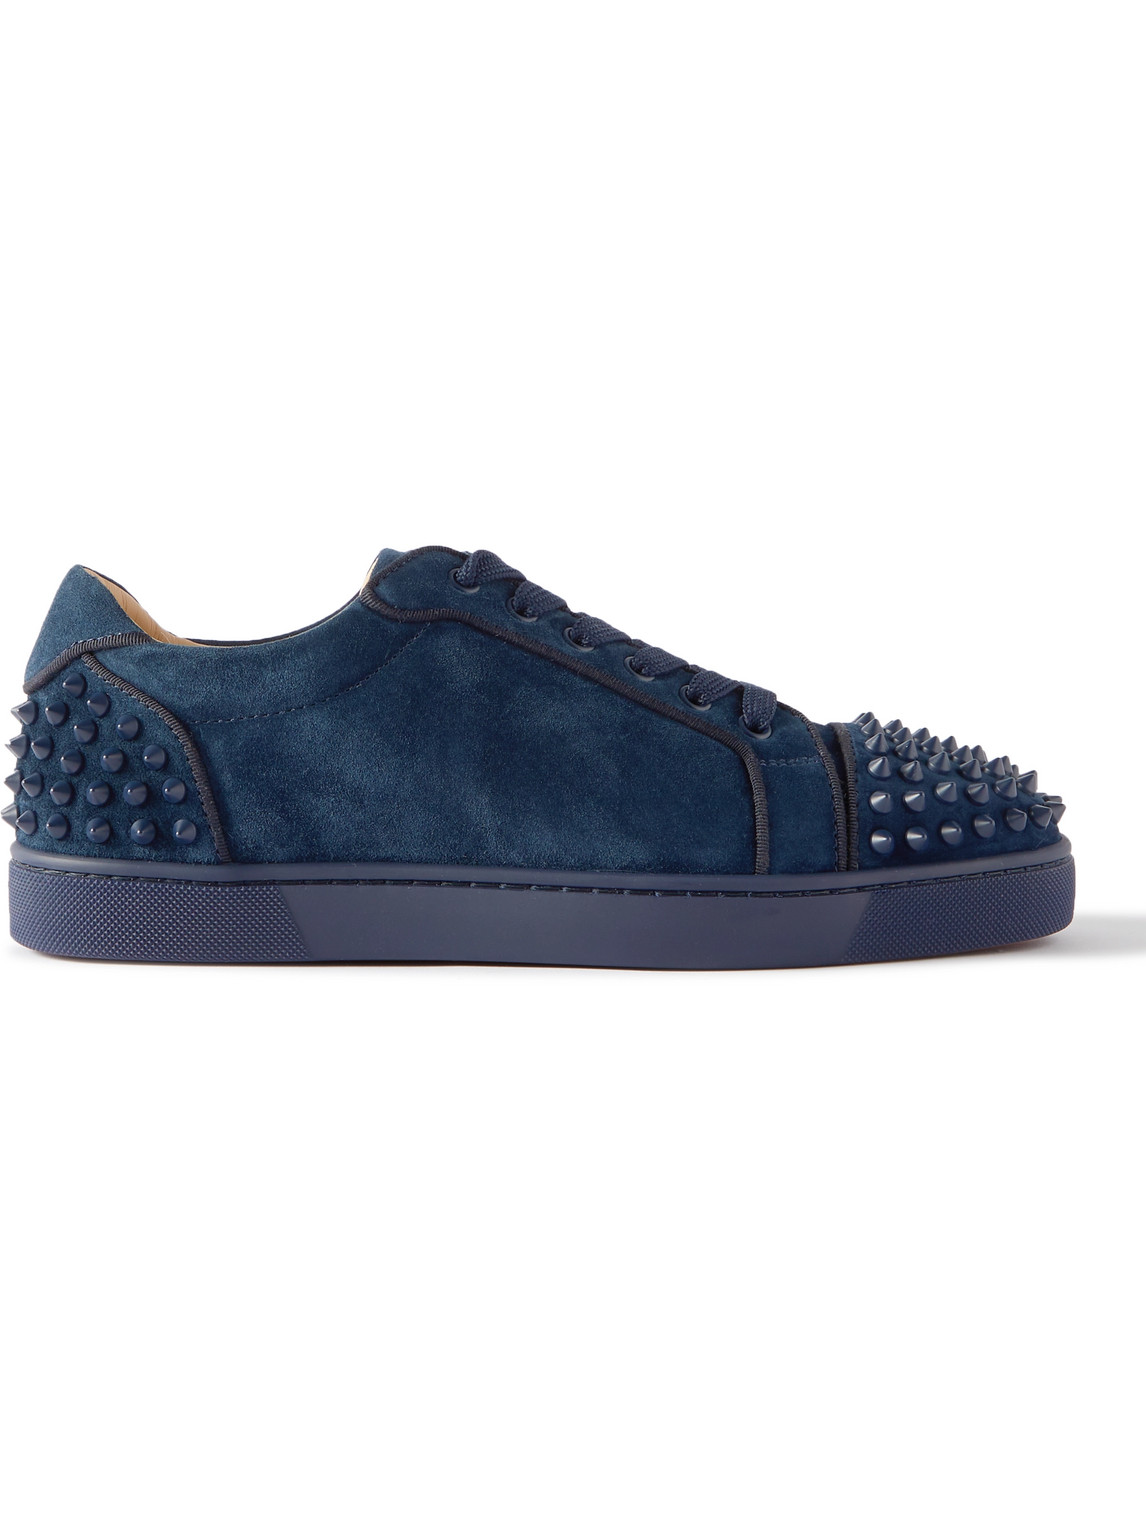 Christian Louboutin - Seavaste 2 Orlato Studded Suede Sneakers - Men - Blue - EU 40